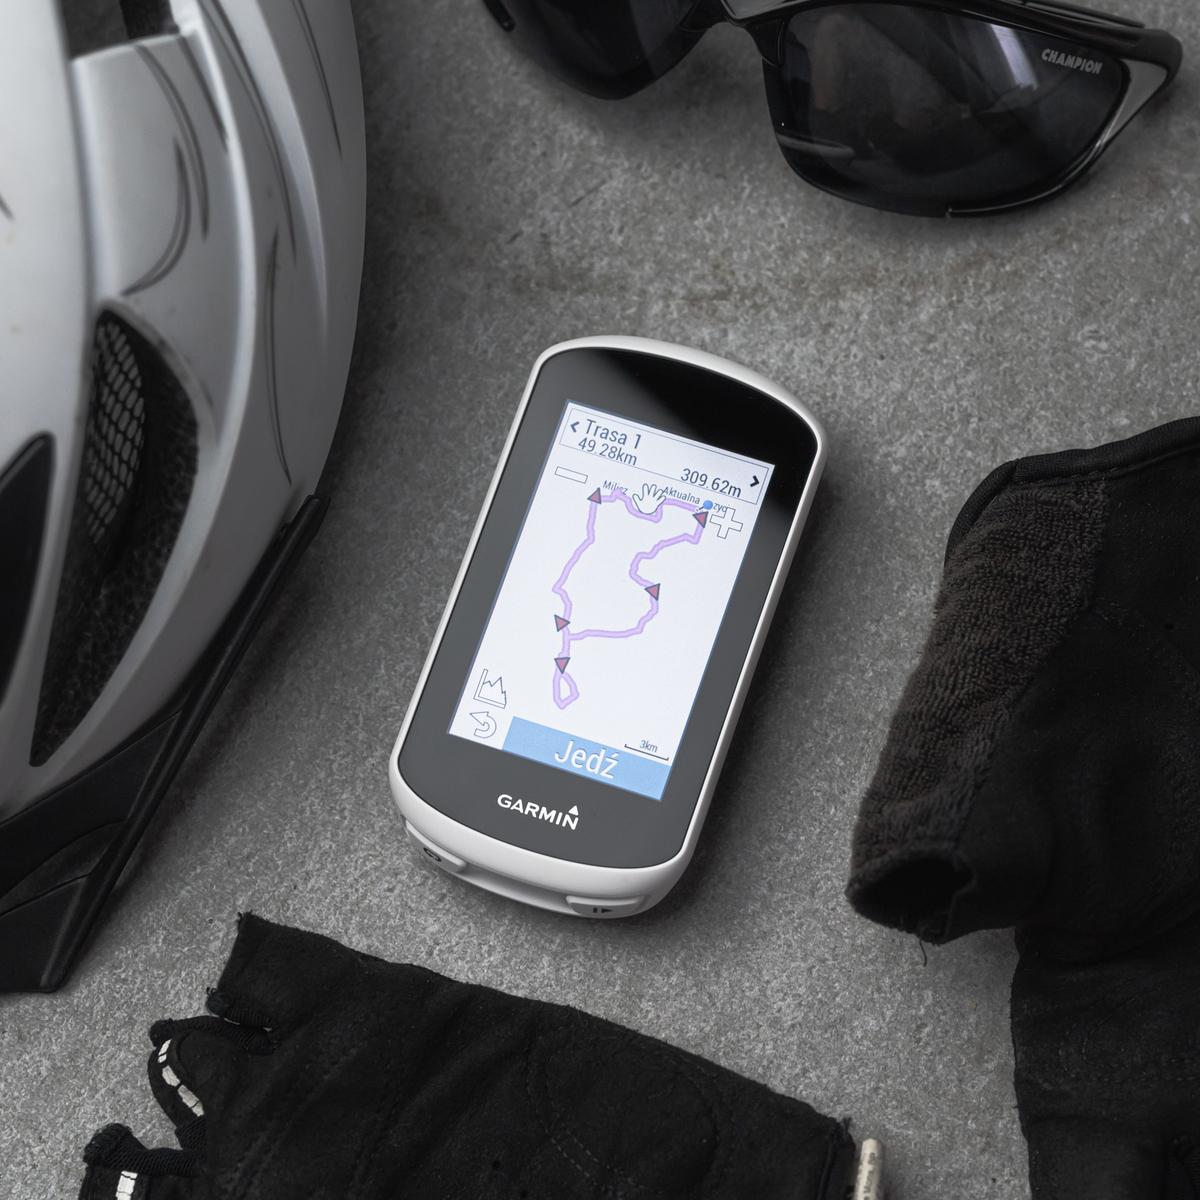 Garmin Edge Explore - recenzja. Dobra nawigacja GPS na rower class="wp-image-975775" title="Garmin Edge Explore - recenzja. Dobra nawigacja GPS na rower" 